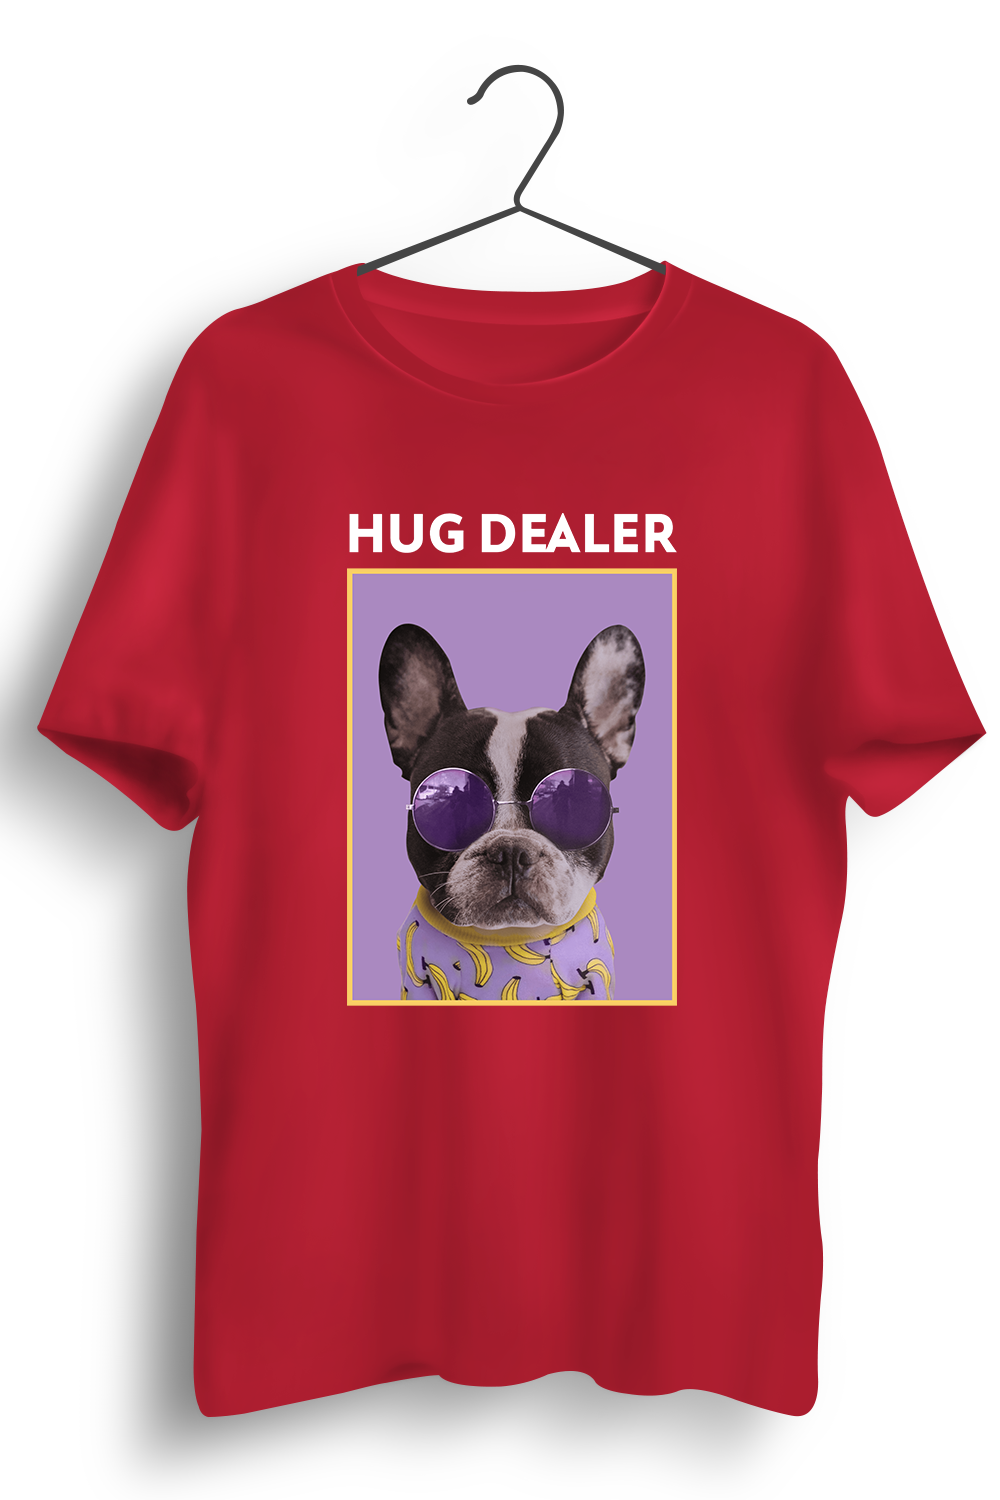 Hug Dealer Graphic Printed Red Tshirt